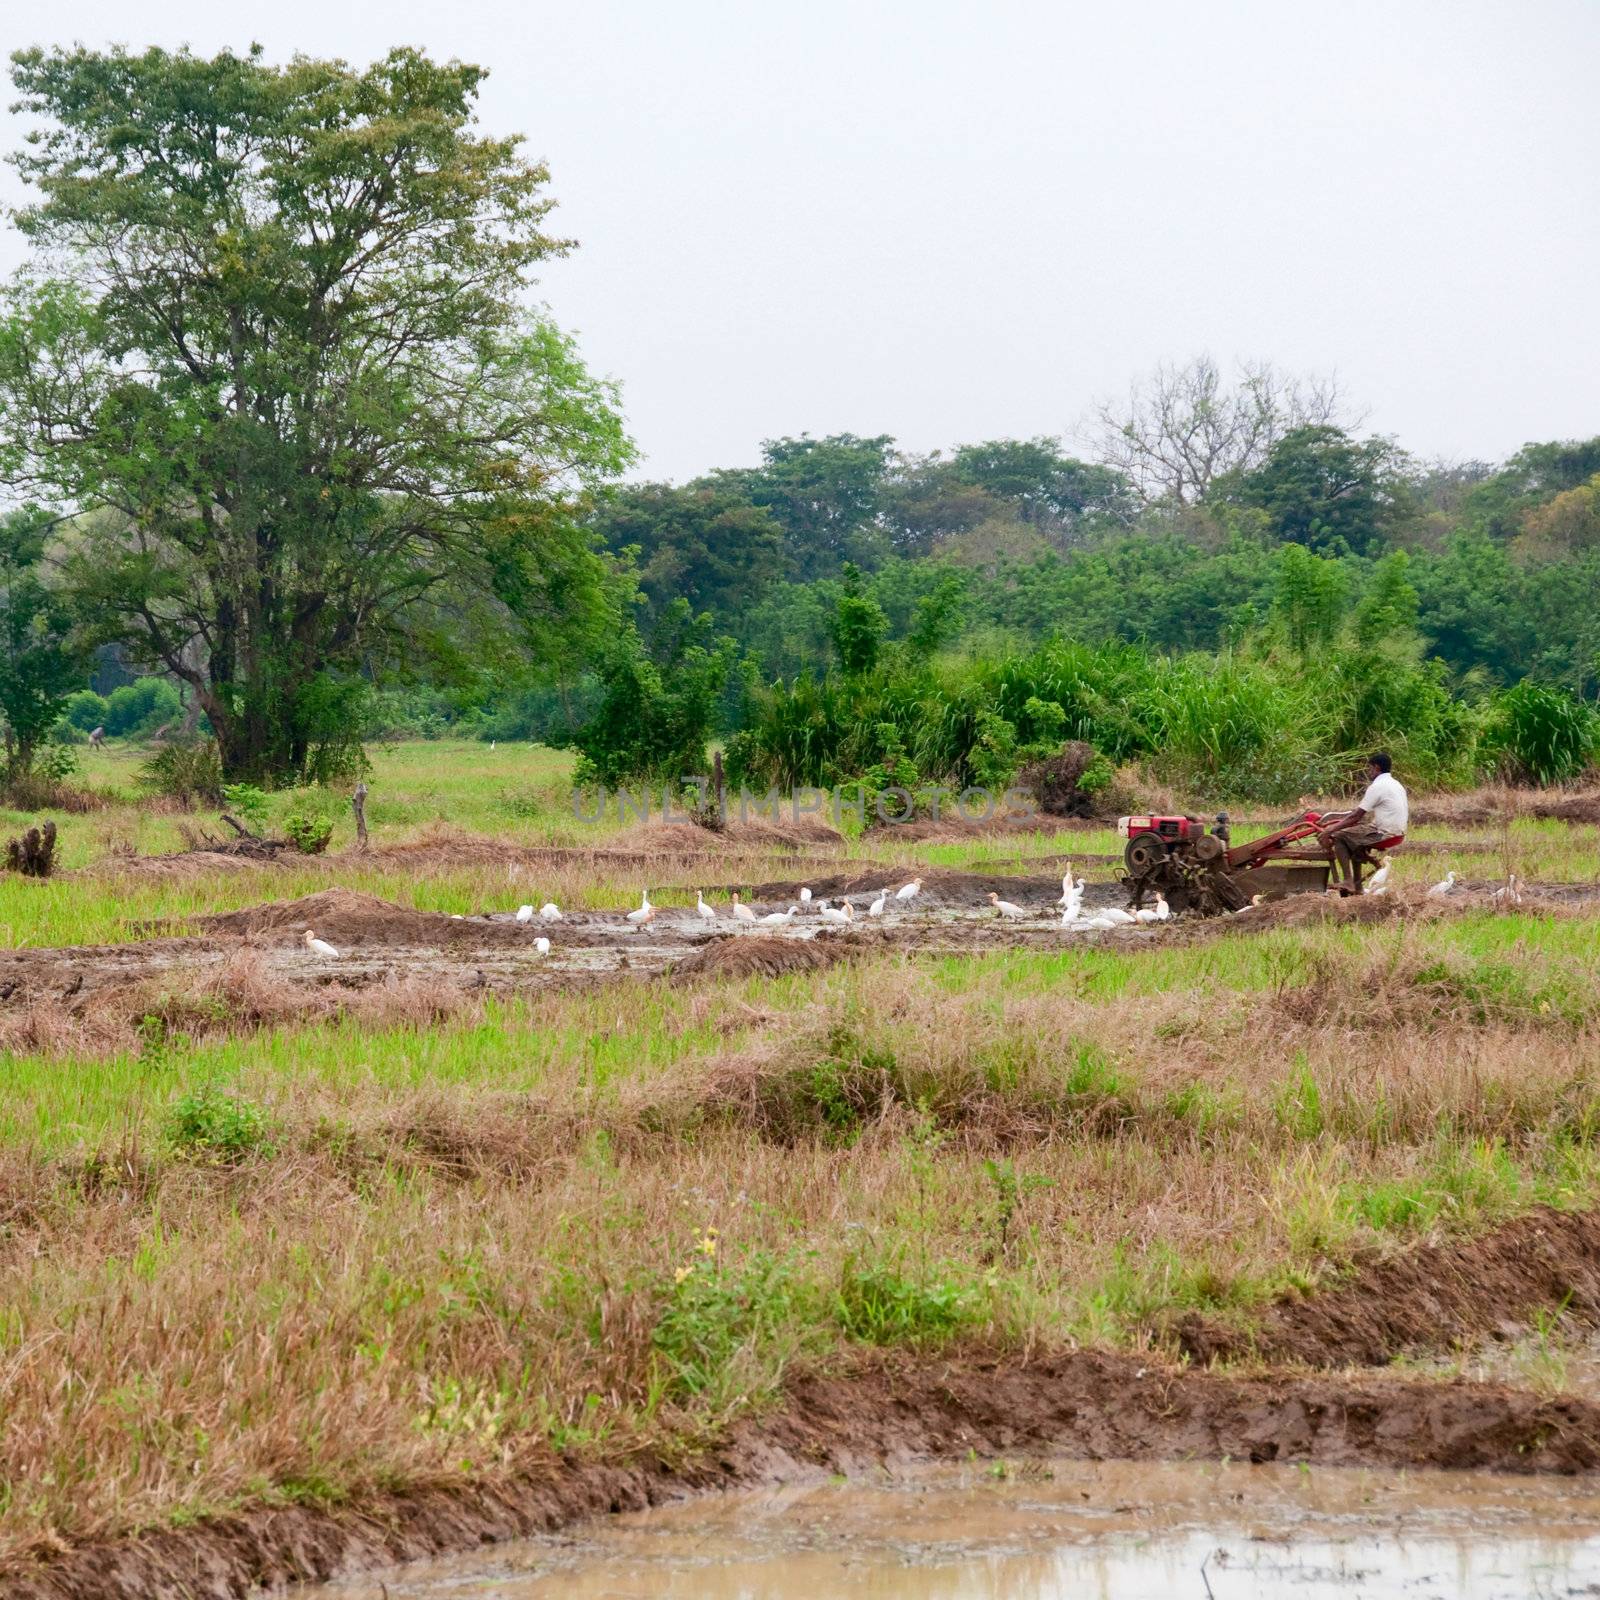 Sri Lanka, Sigiriya area - Apr 28, 2011: A man working with a motor plow in a rice field